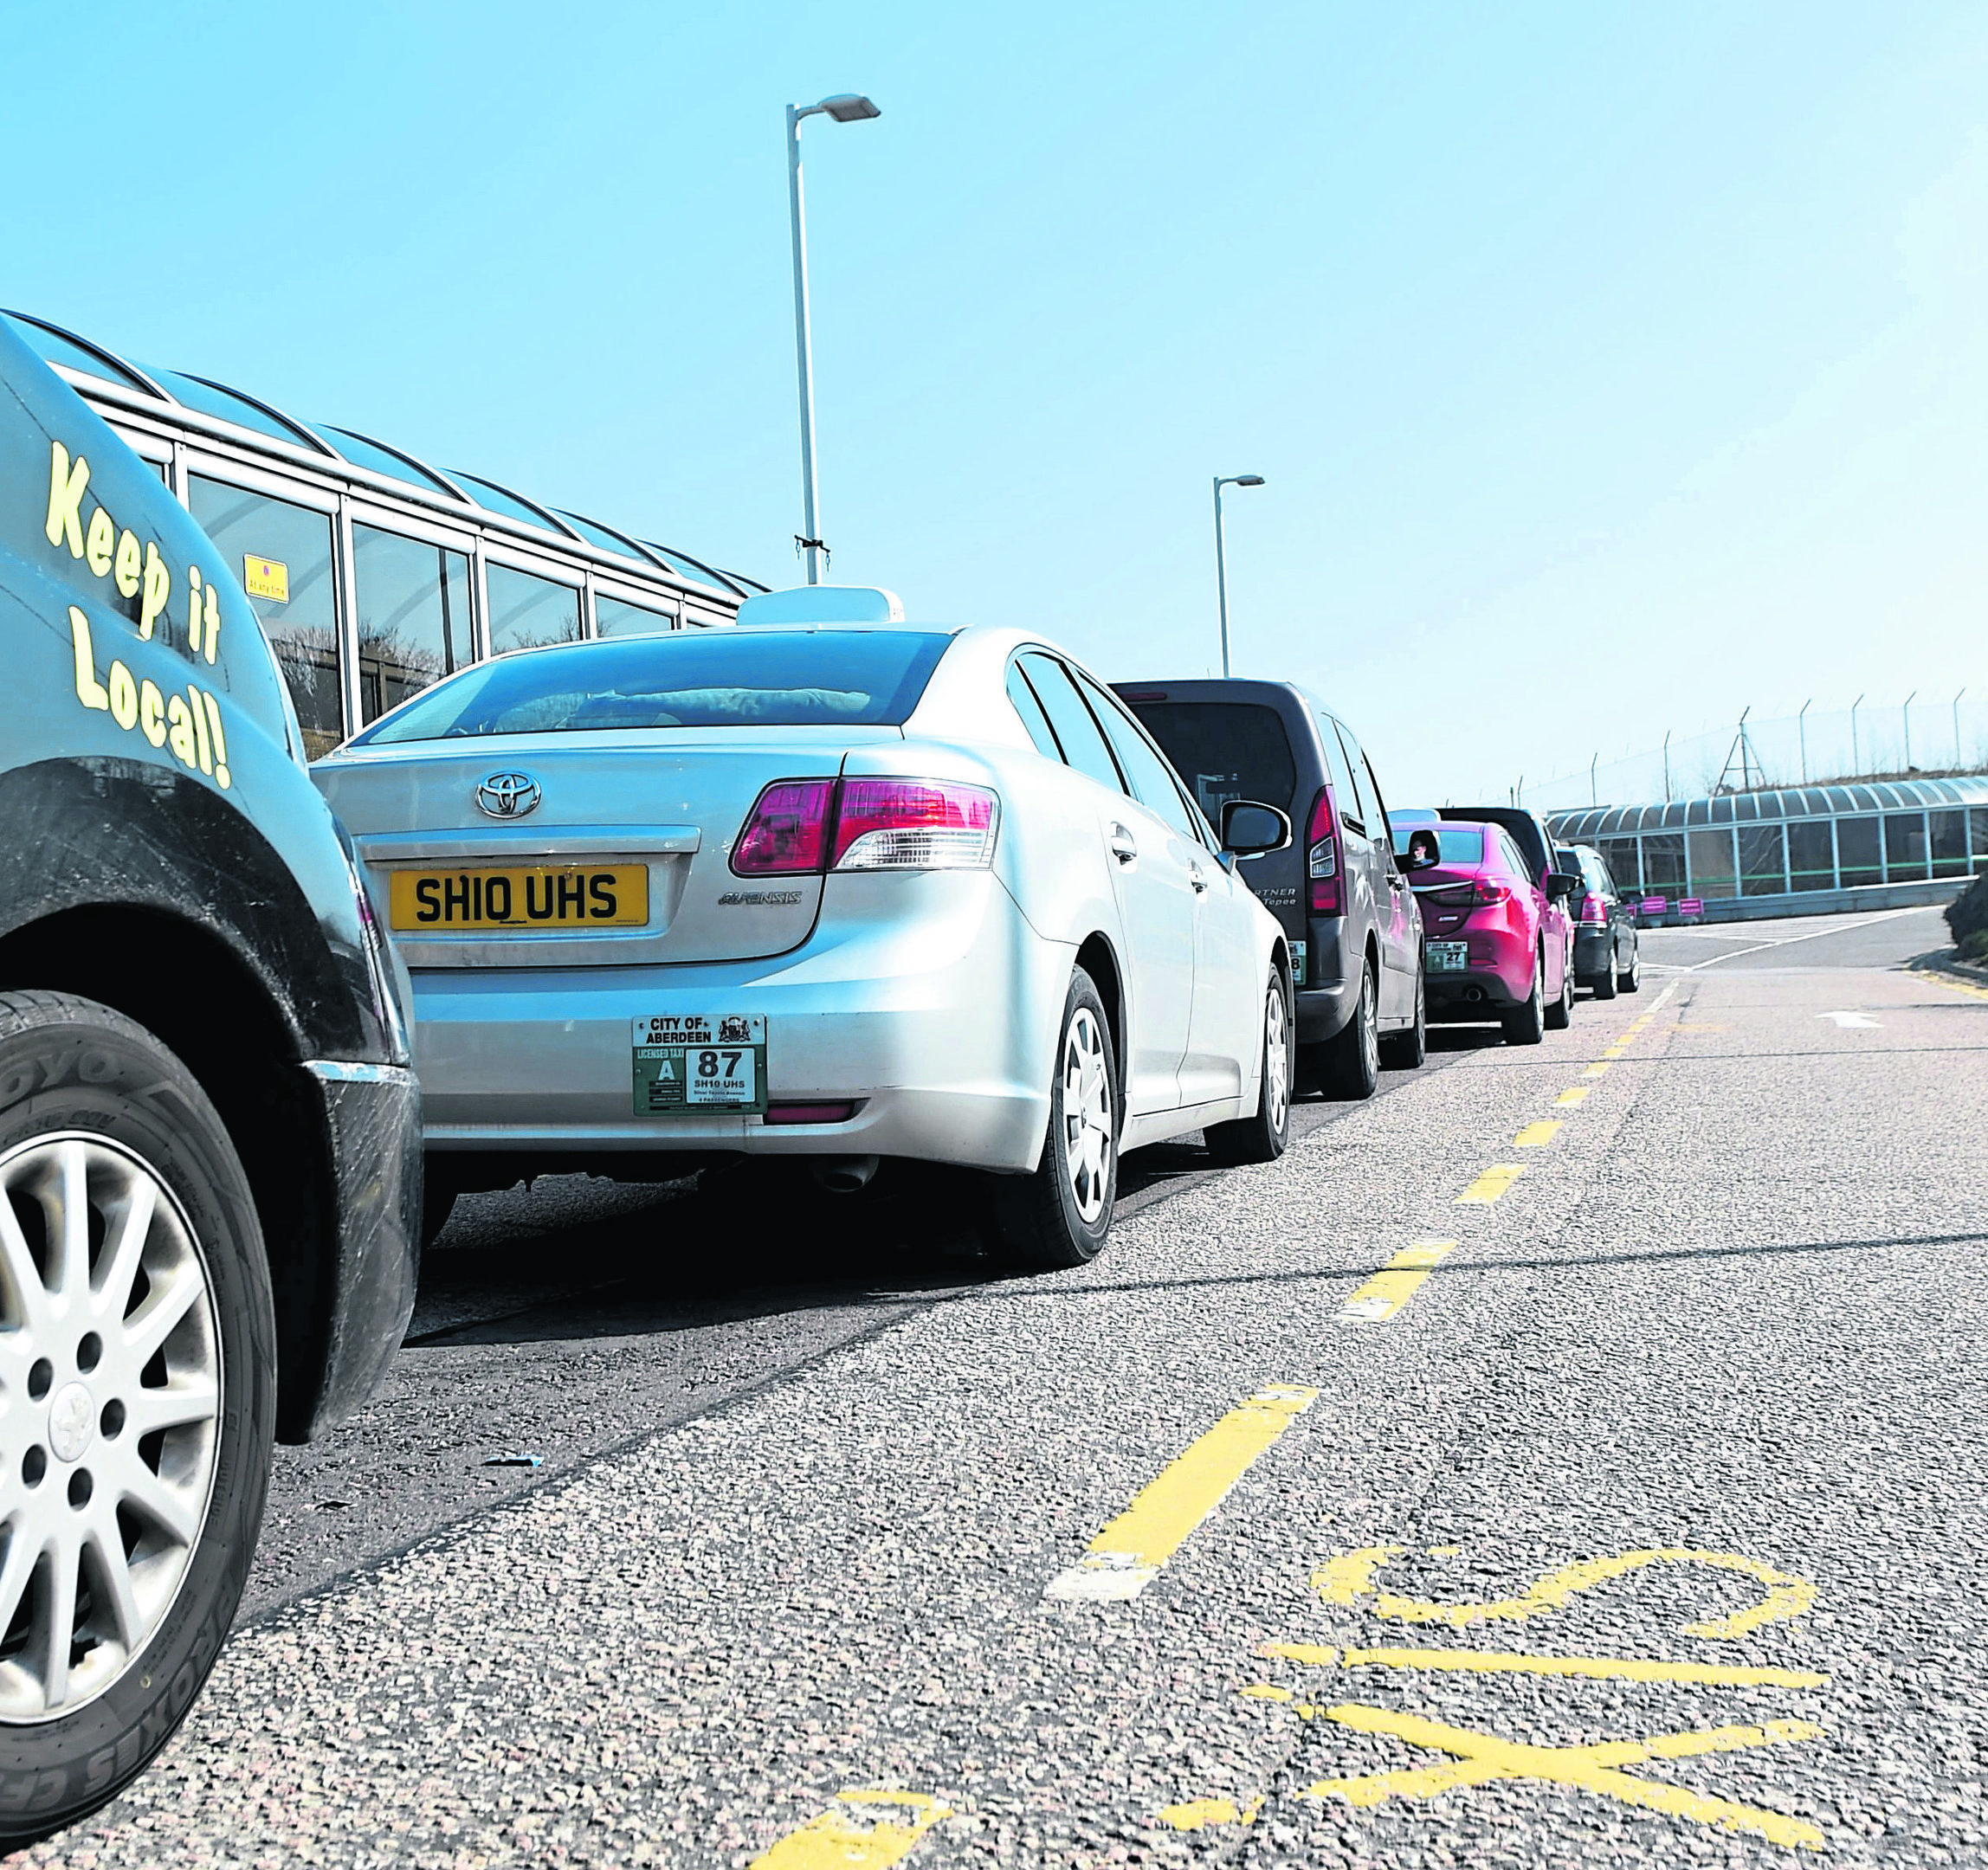 The taxi rank at Aberdeen International Airport.